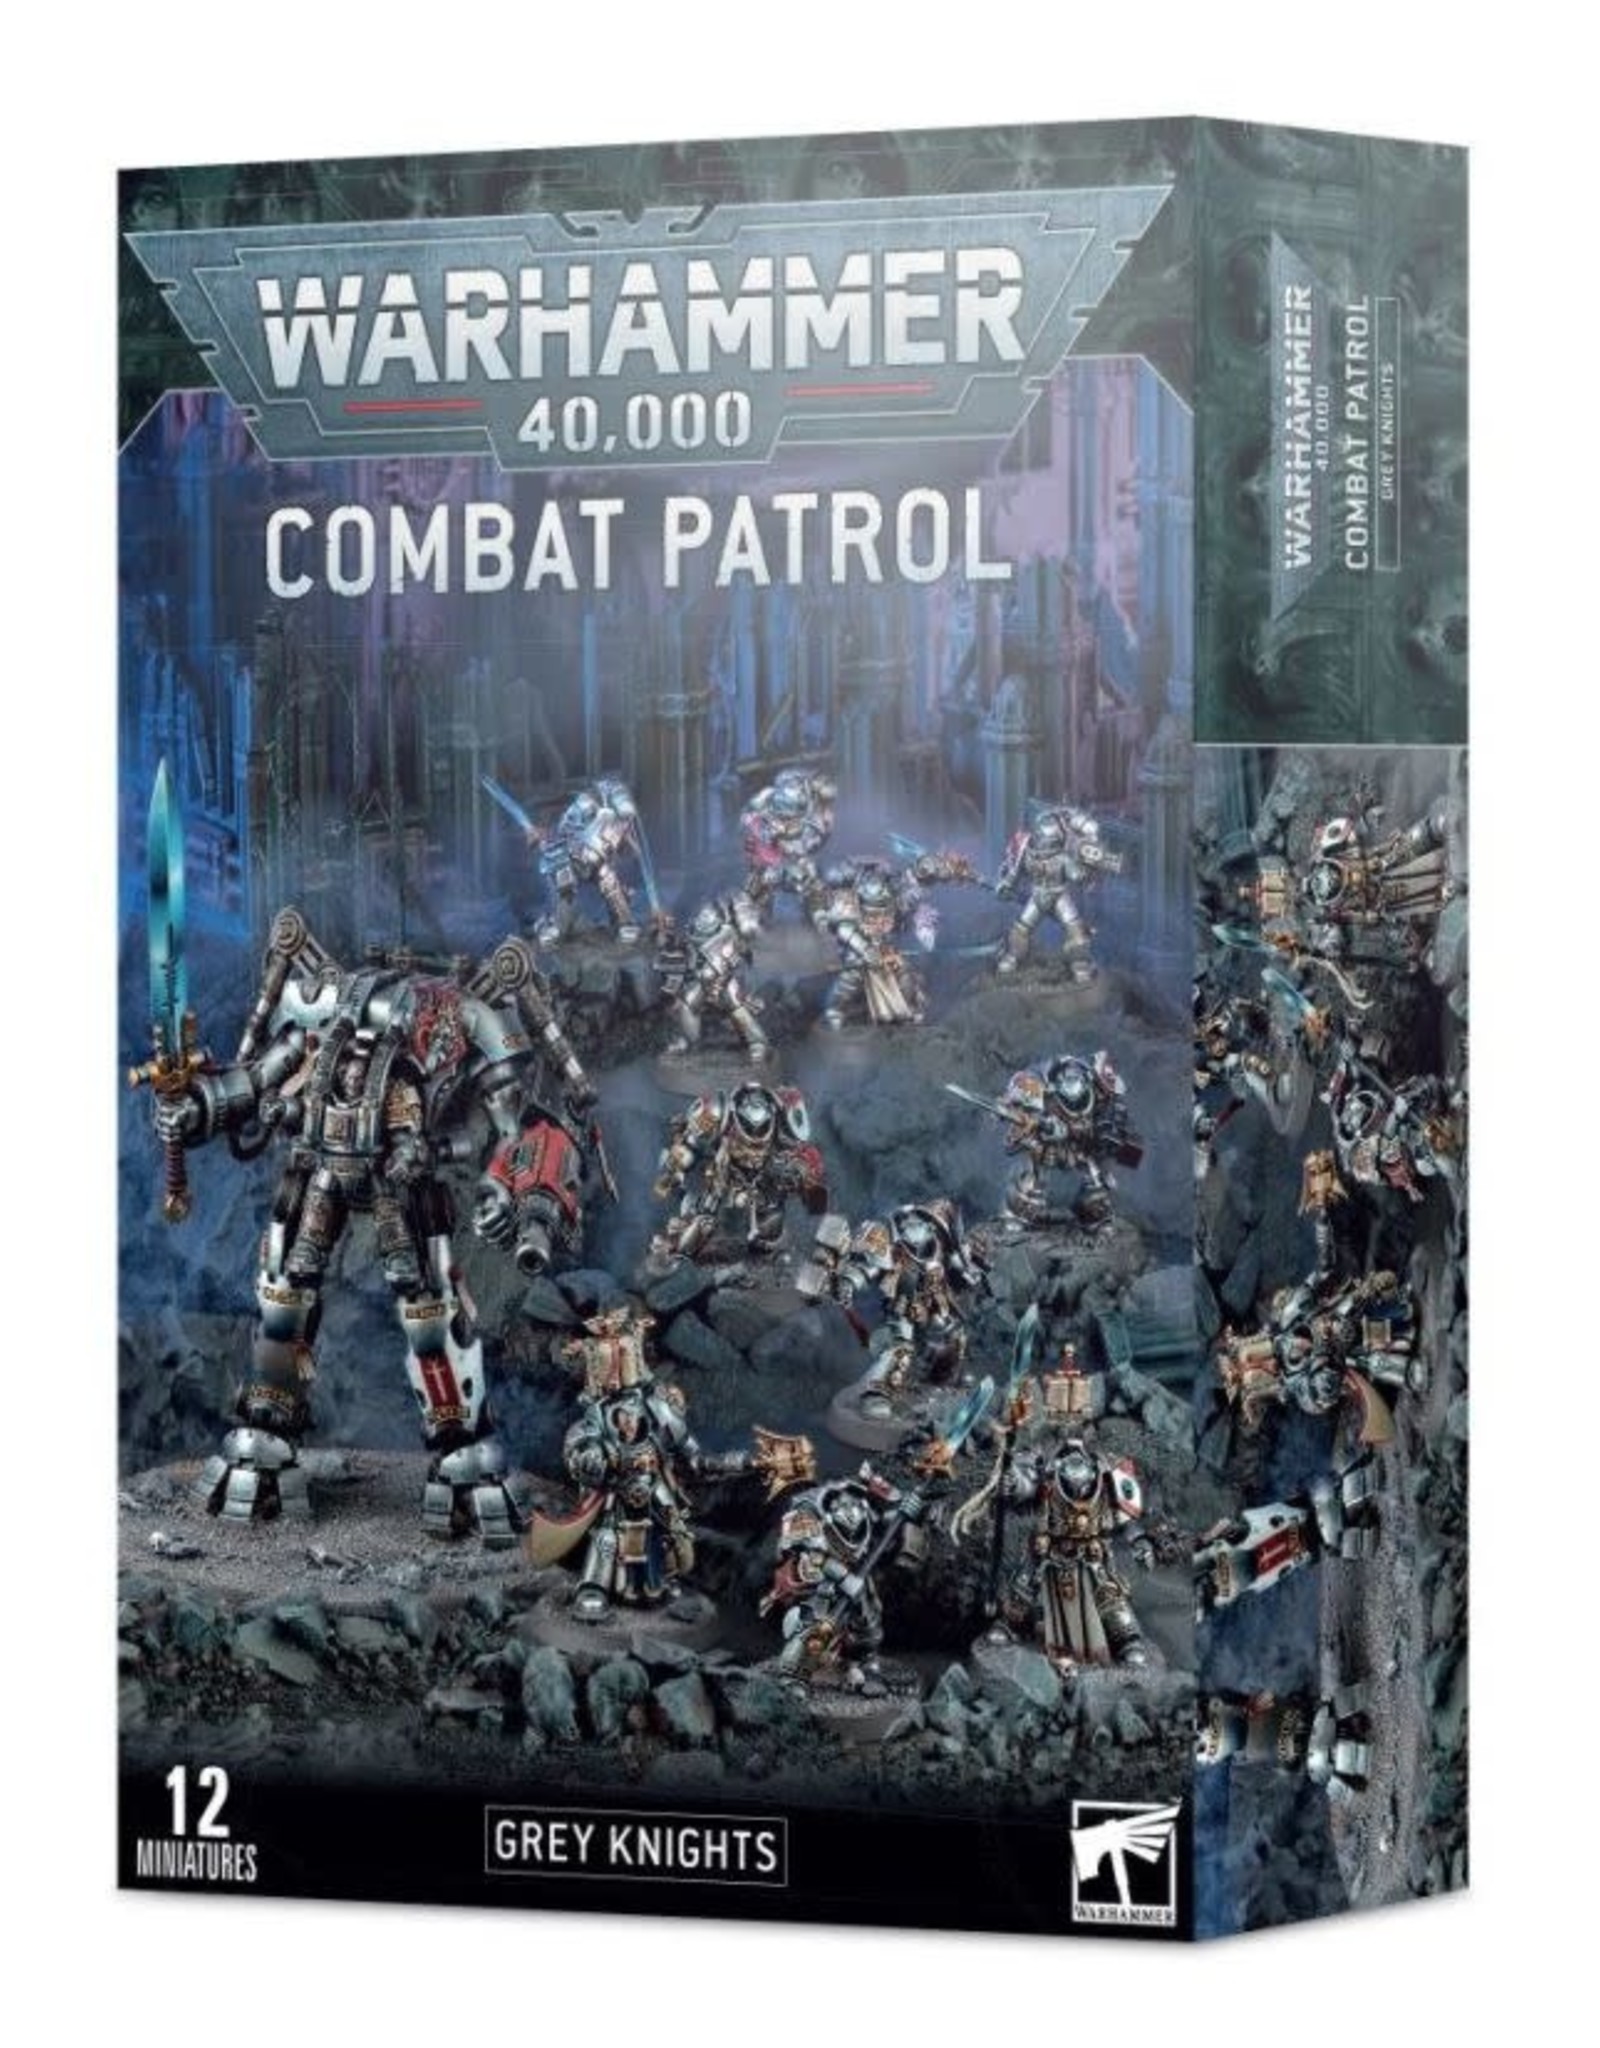 Warhammer 40k Combat Patrol: Grey Knights